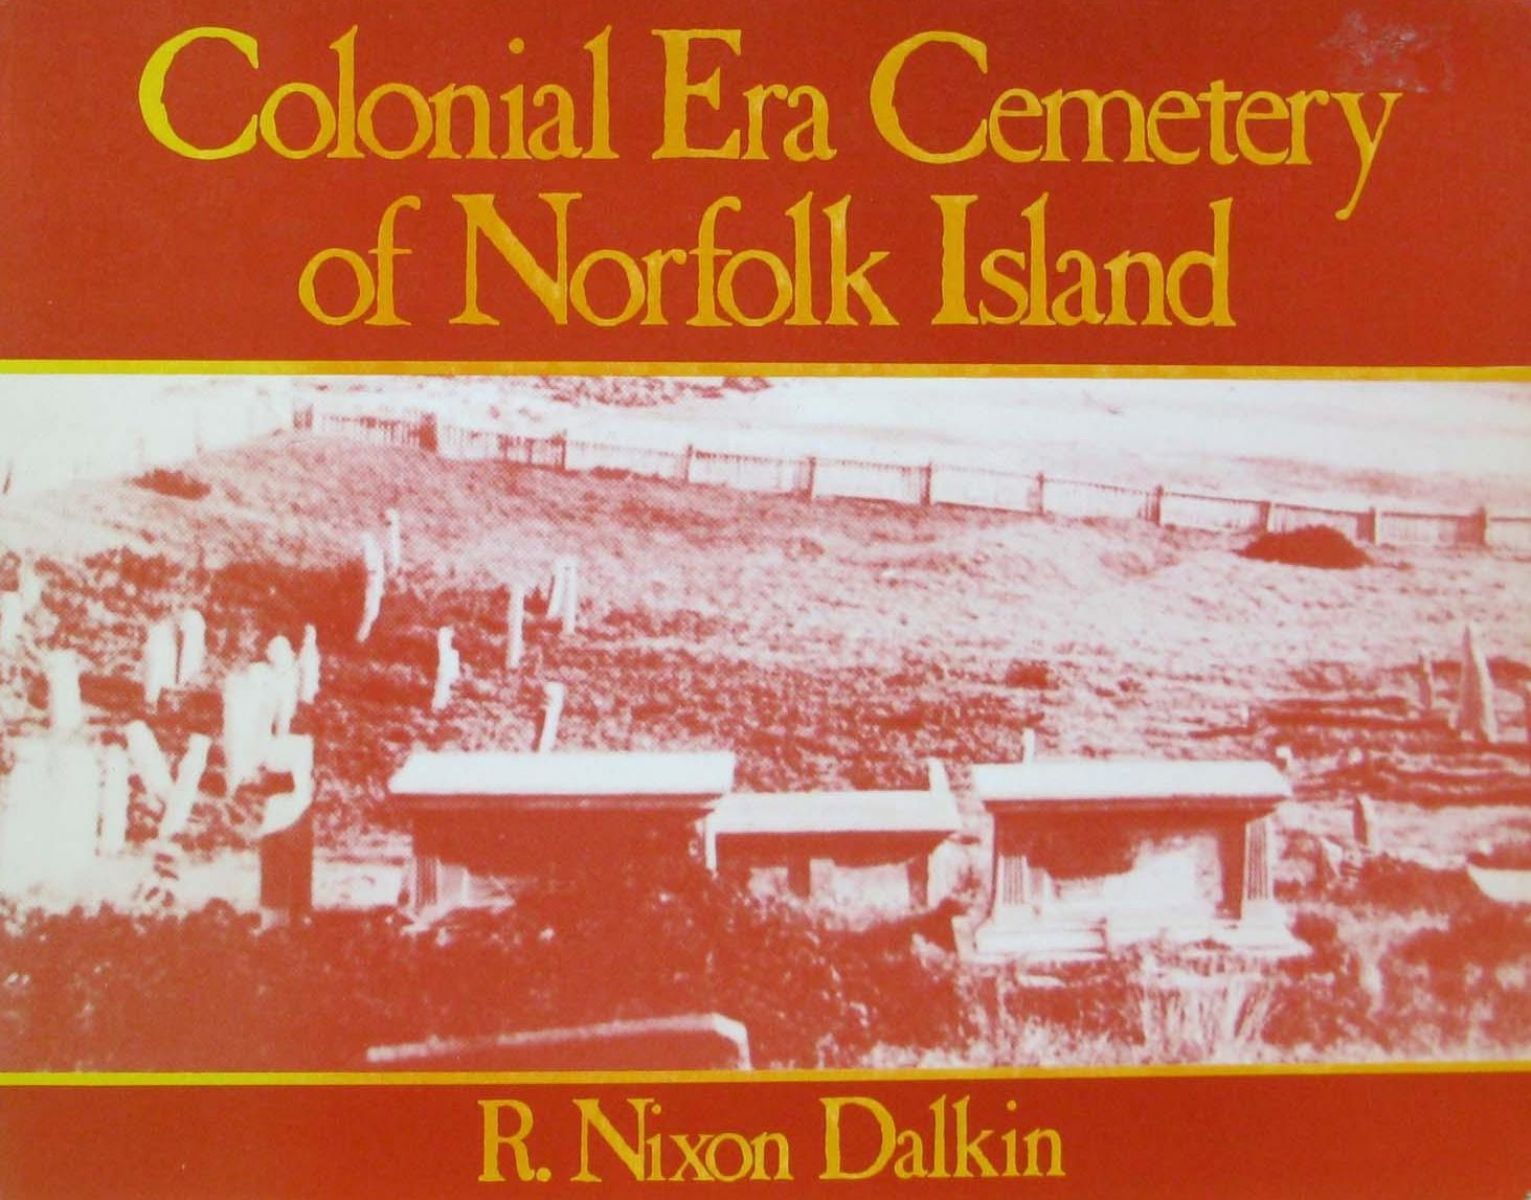 COLONIAL ERA CEMETERY of Norfolk Island